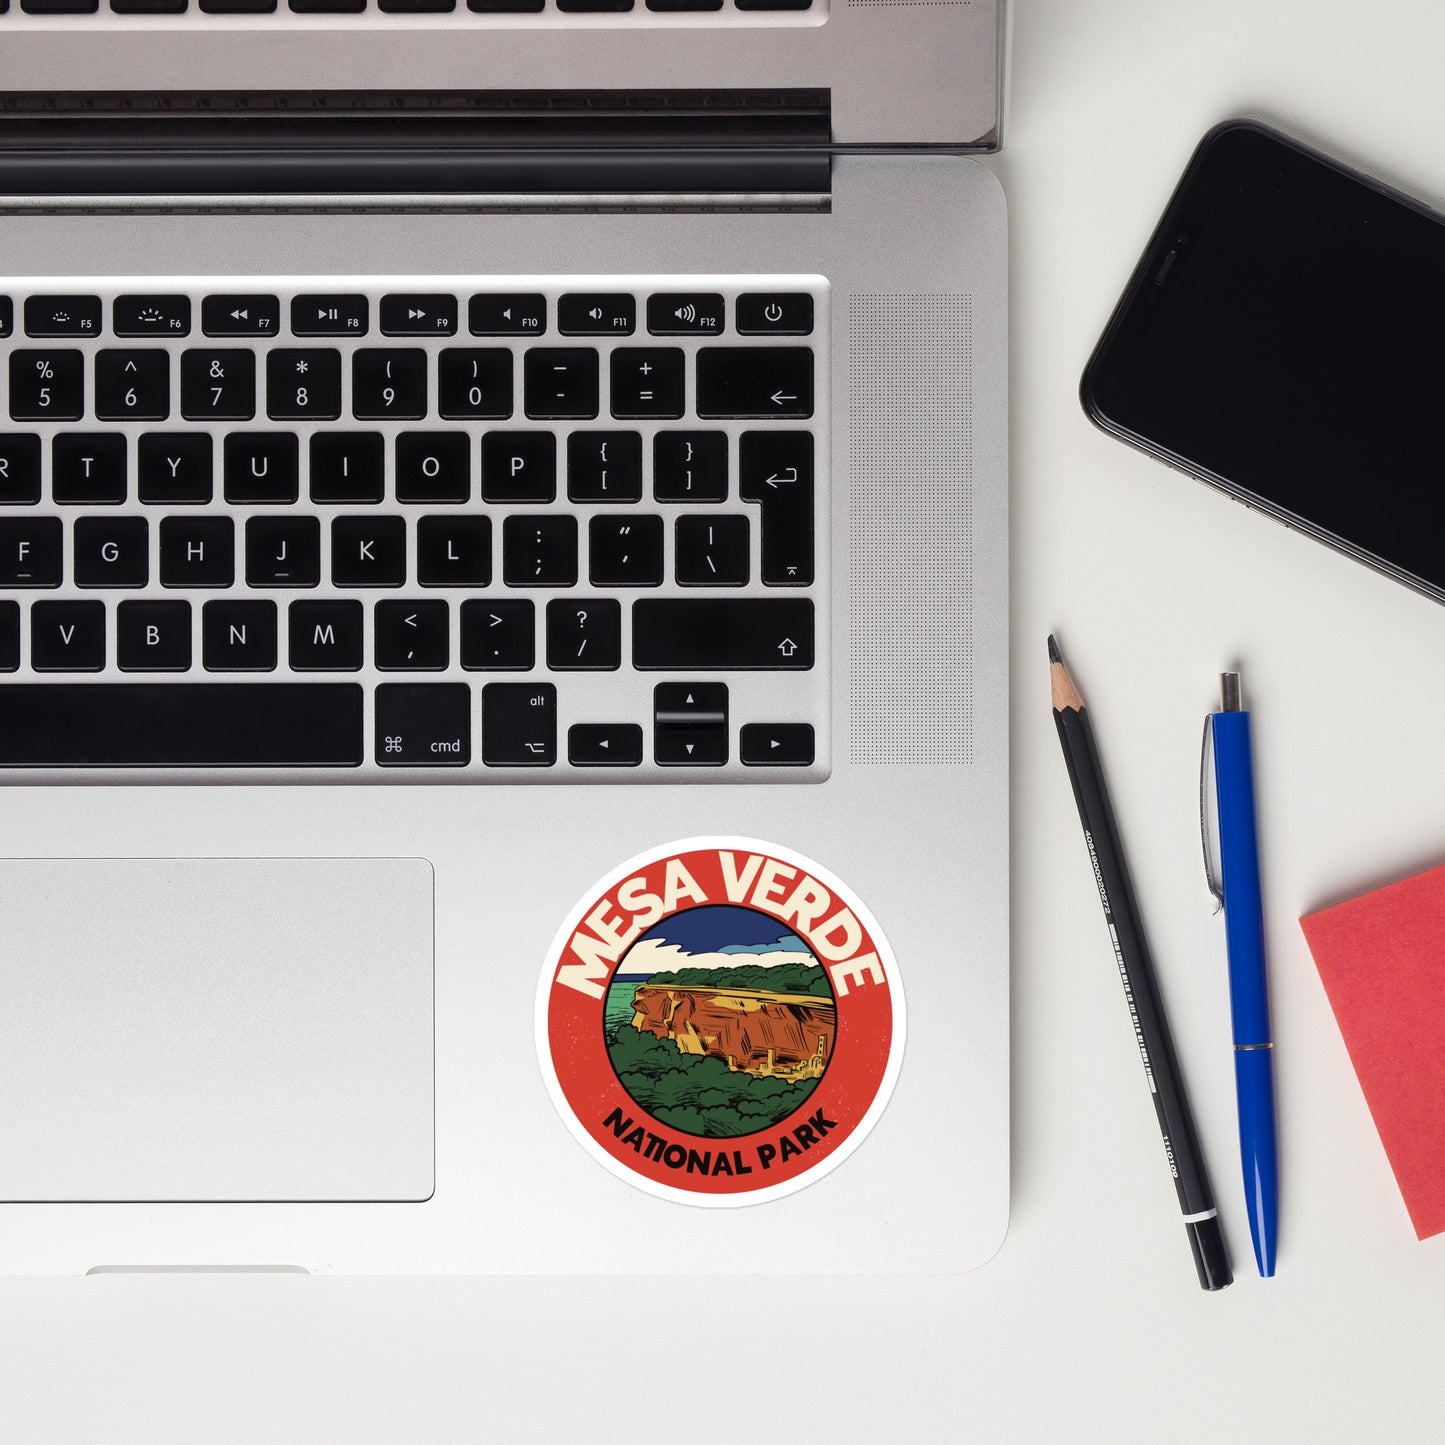 A sticker of Mesa Verde National Park on a laptop